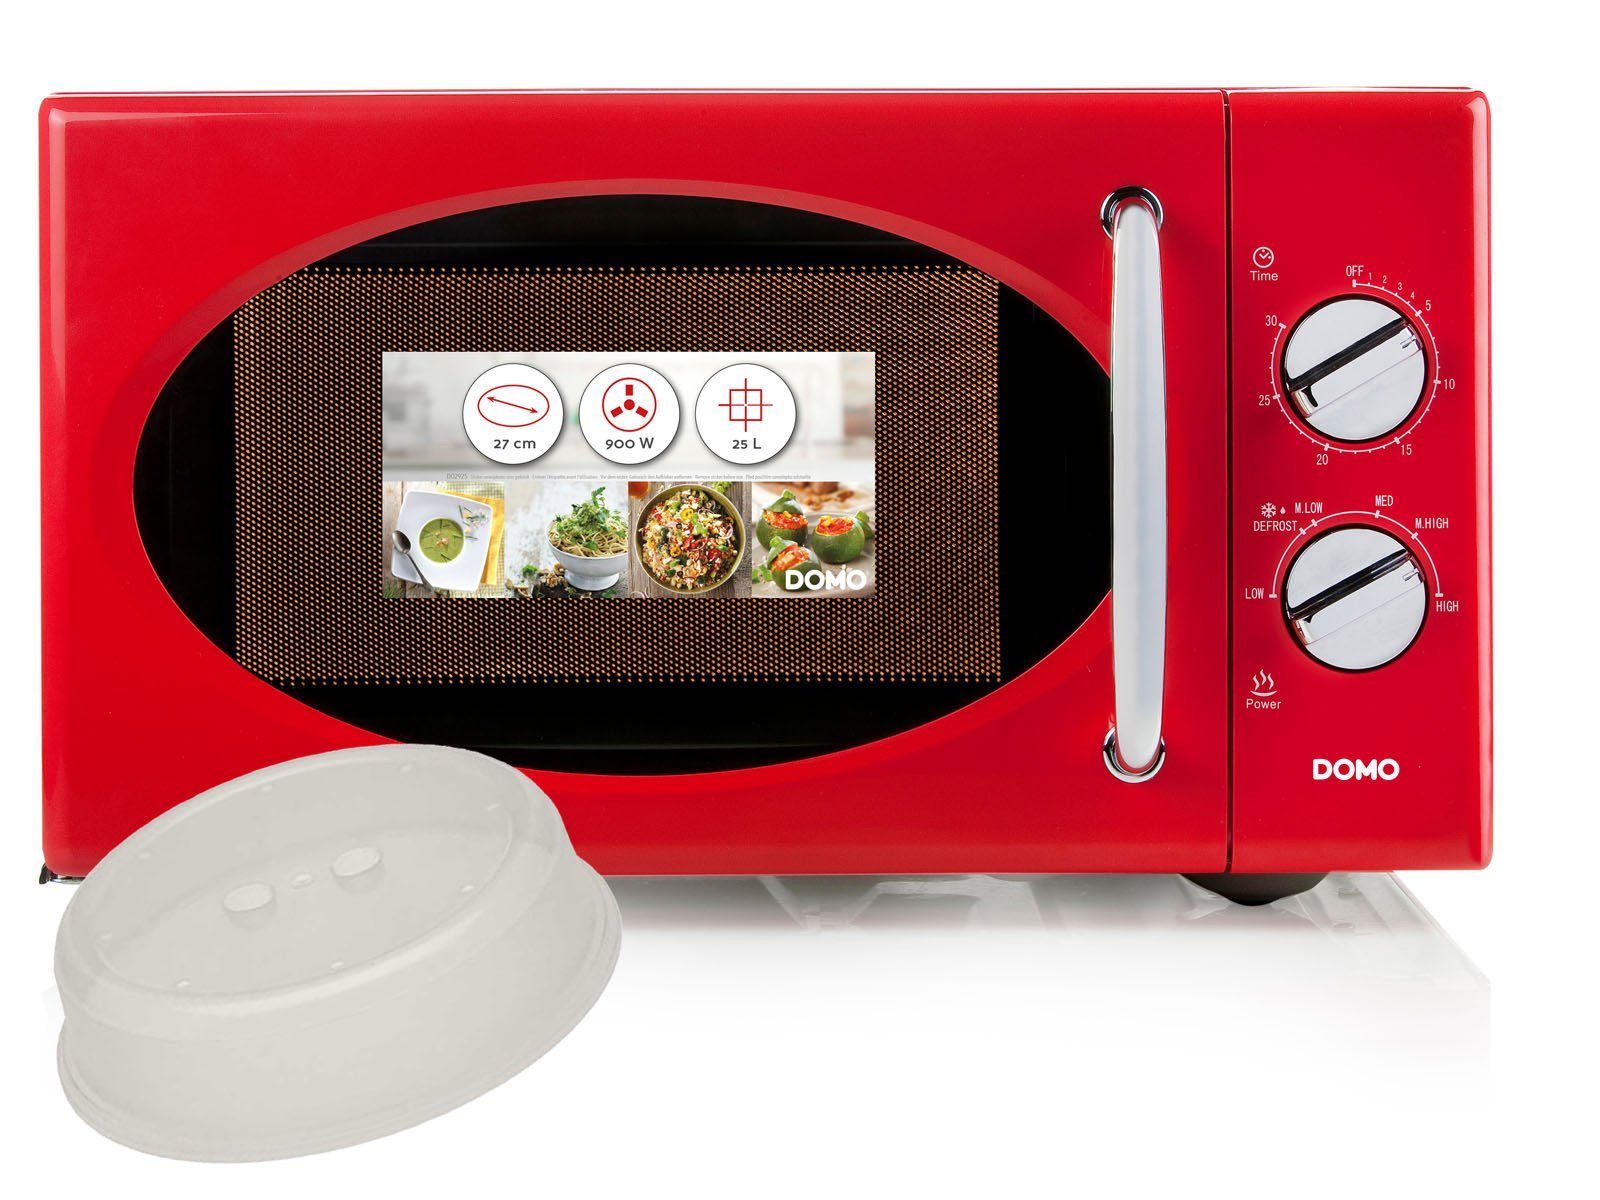 Domo Mikrowelle, 6 Kochprogramme, Auftaufunktion, Timer, 25 l, kleines kompaktes Микроволновые печиgerät & Abdeckhaube, Design in Retro Rot